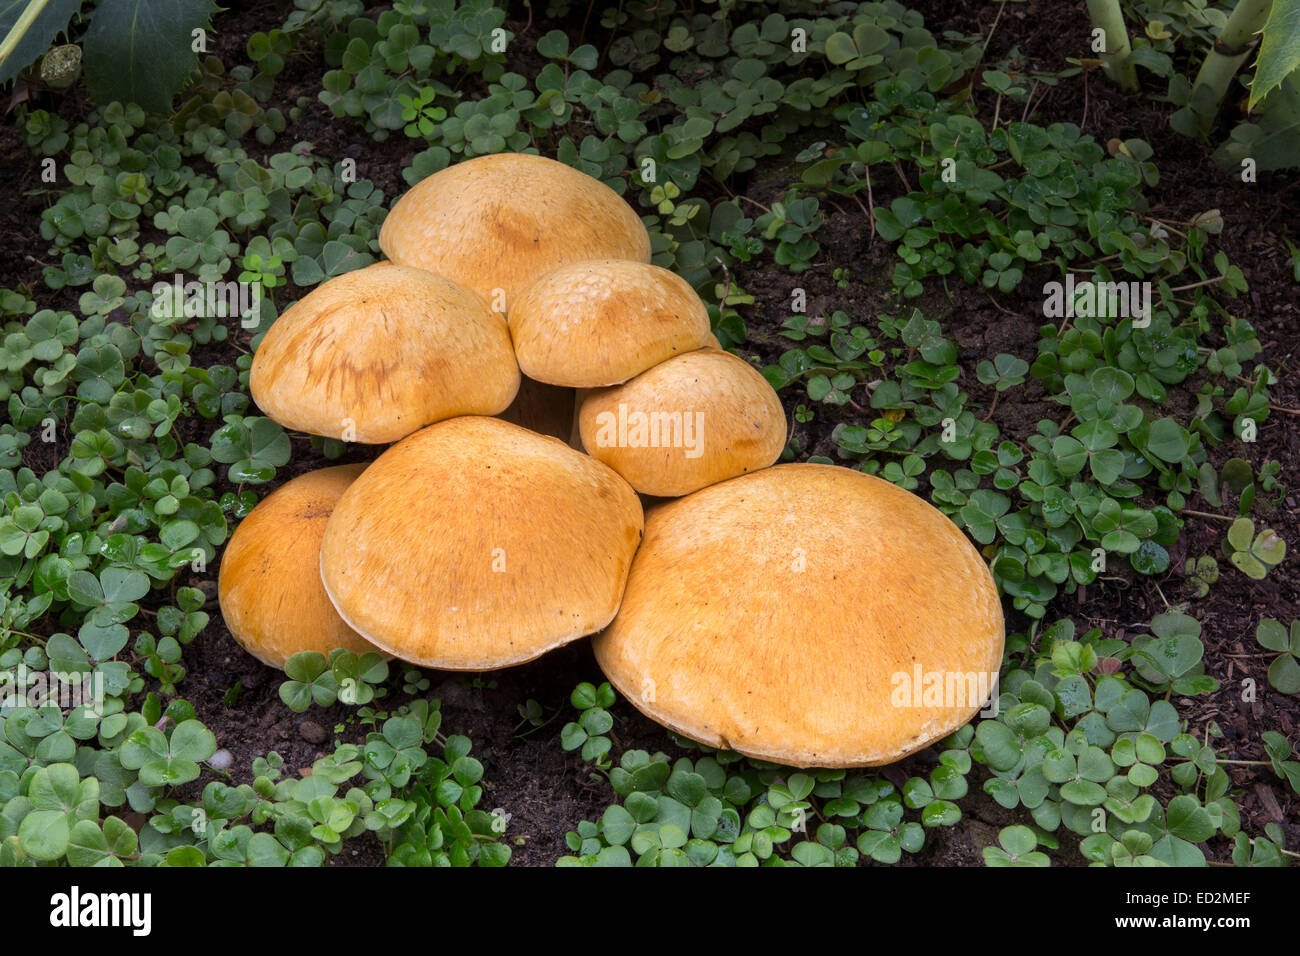 Honey fungus mushroom, Honey fungus mushrooms, mushroom, mushrooms, mushroom cap, mushroom caps, Armillaria mellea, Novato, Marin County, California Stock Photo